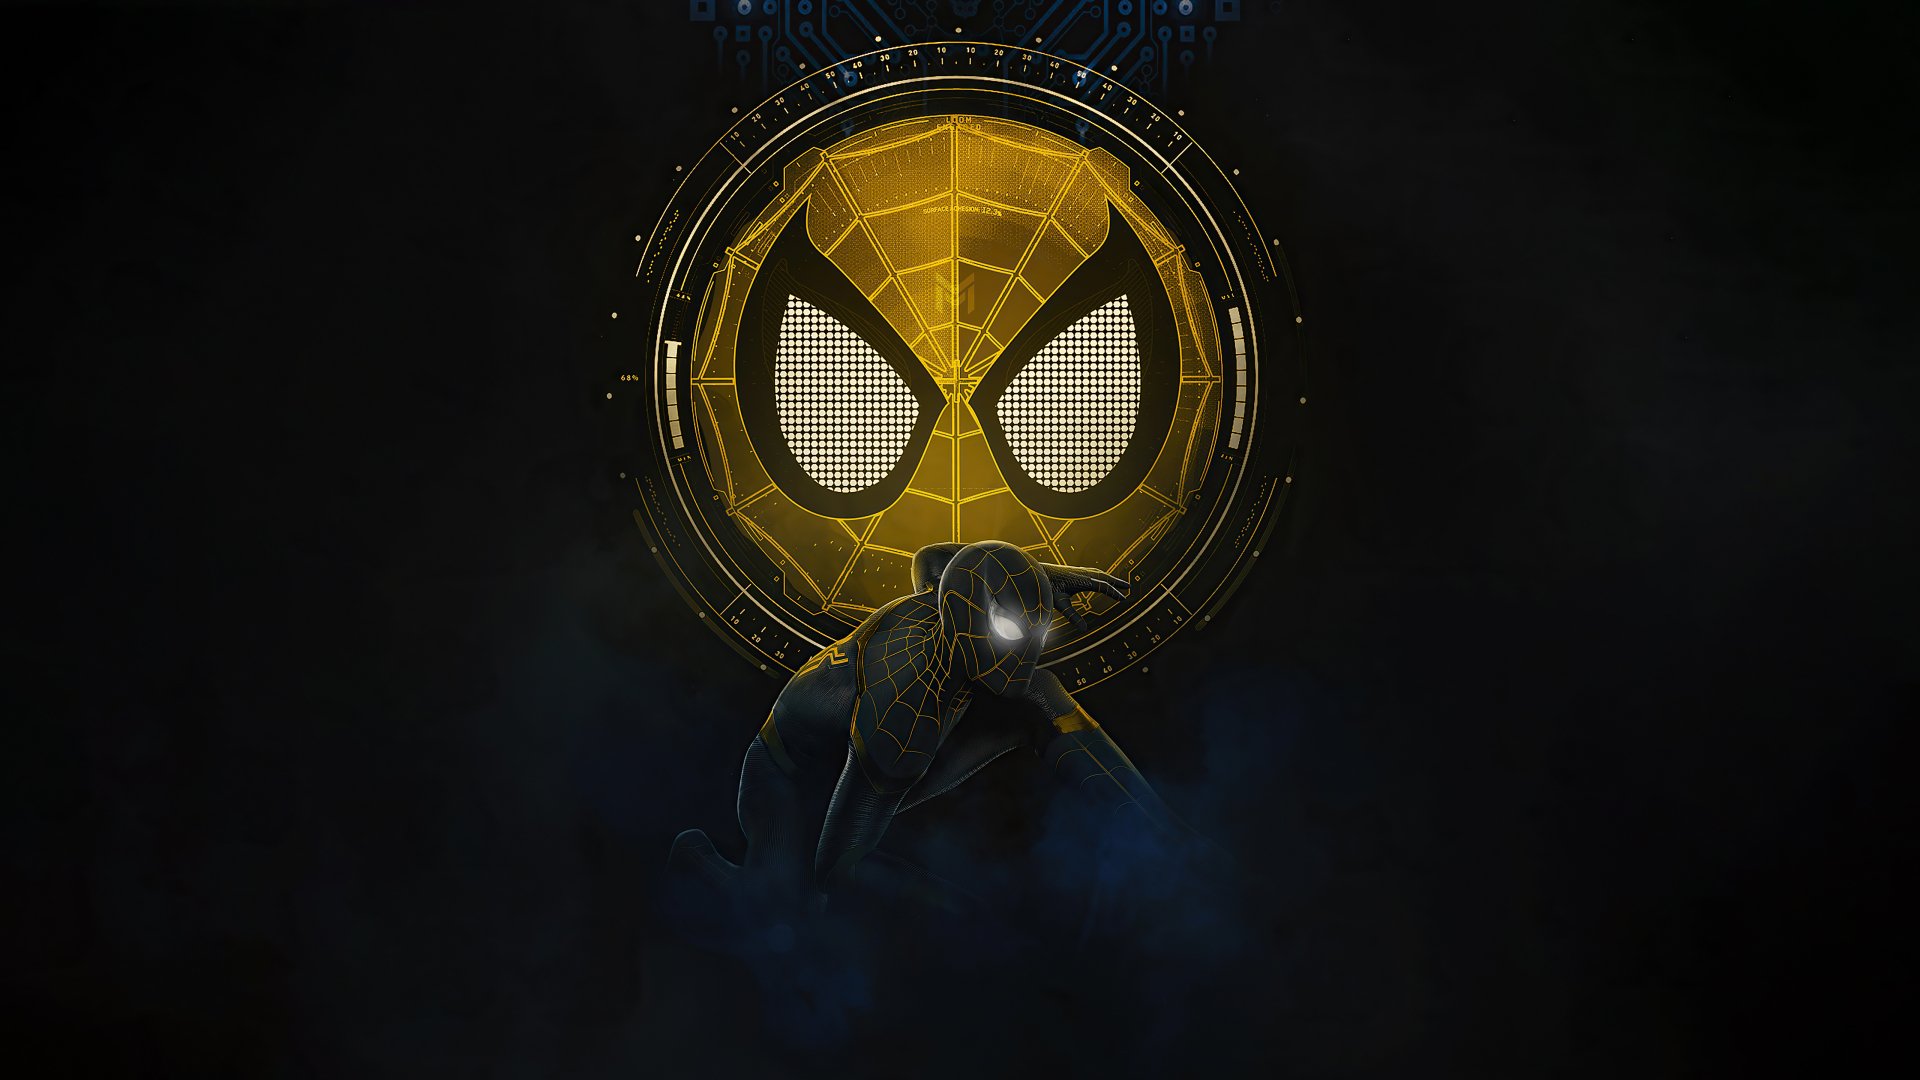 Spider-Man: No Way Home 4k Ultra HD Wallpaper.